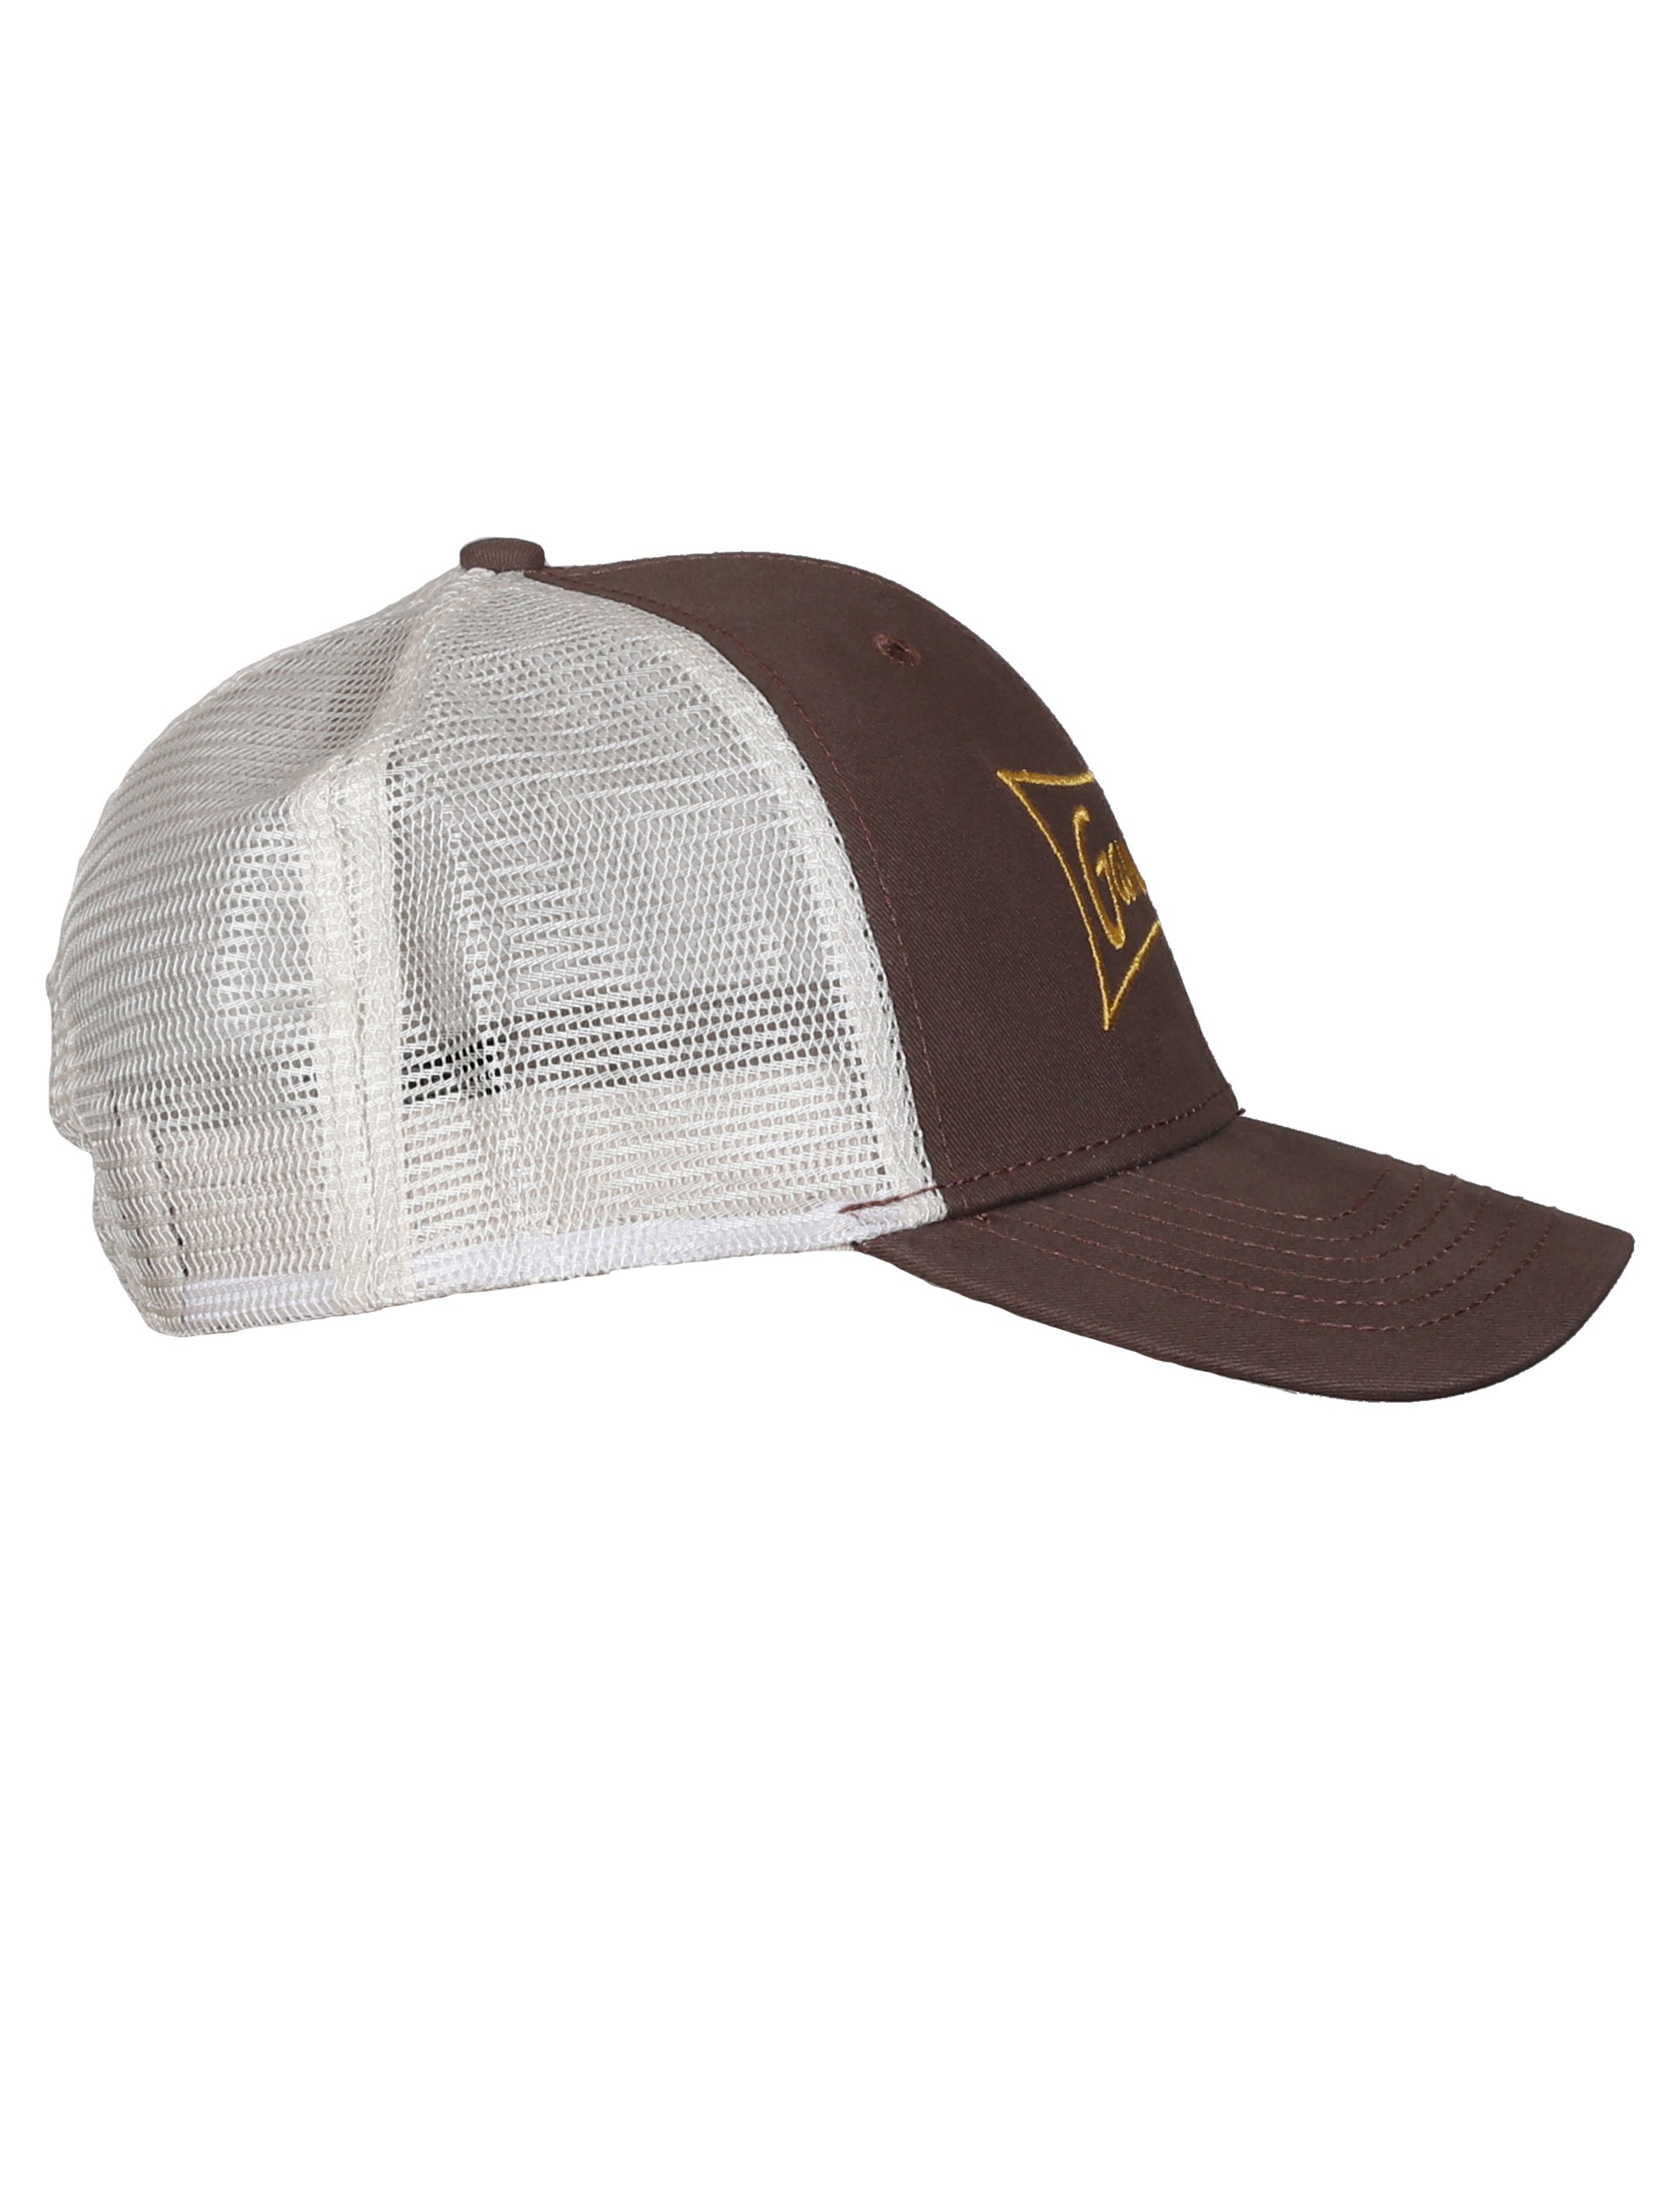 Gamehide logo hat side (brown)